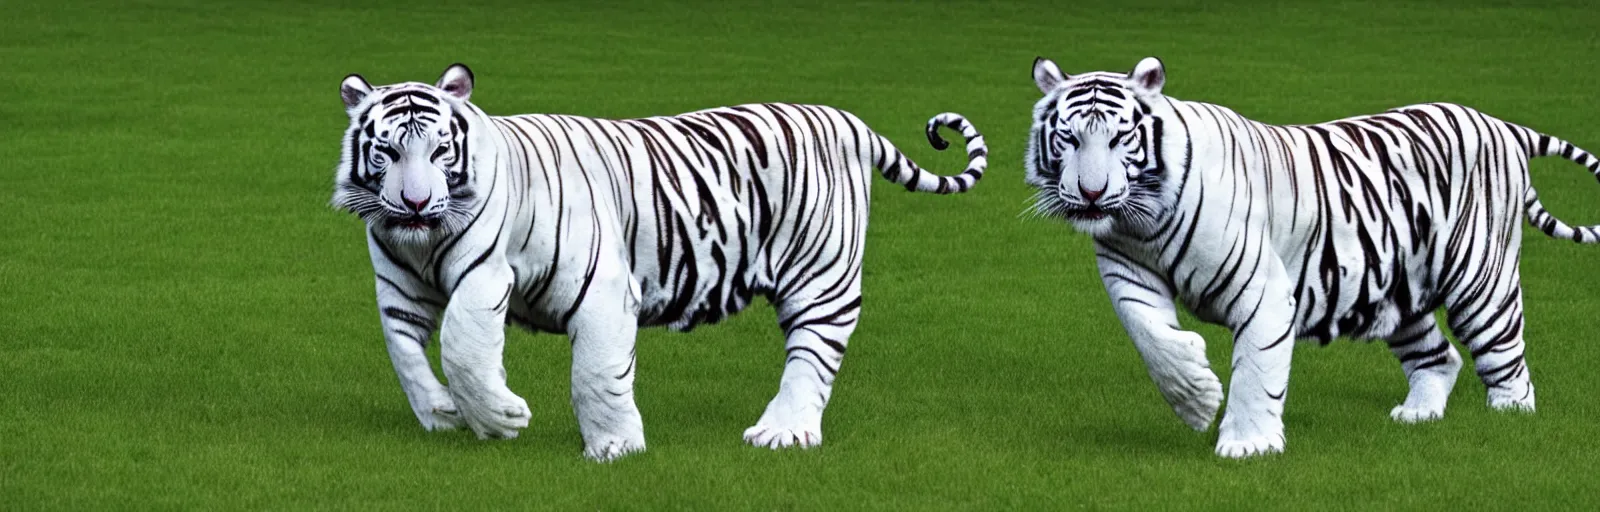 Prompt: White tiger with dark blue stripes, running on short grass